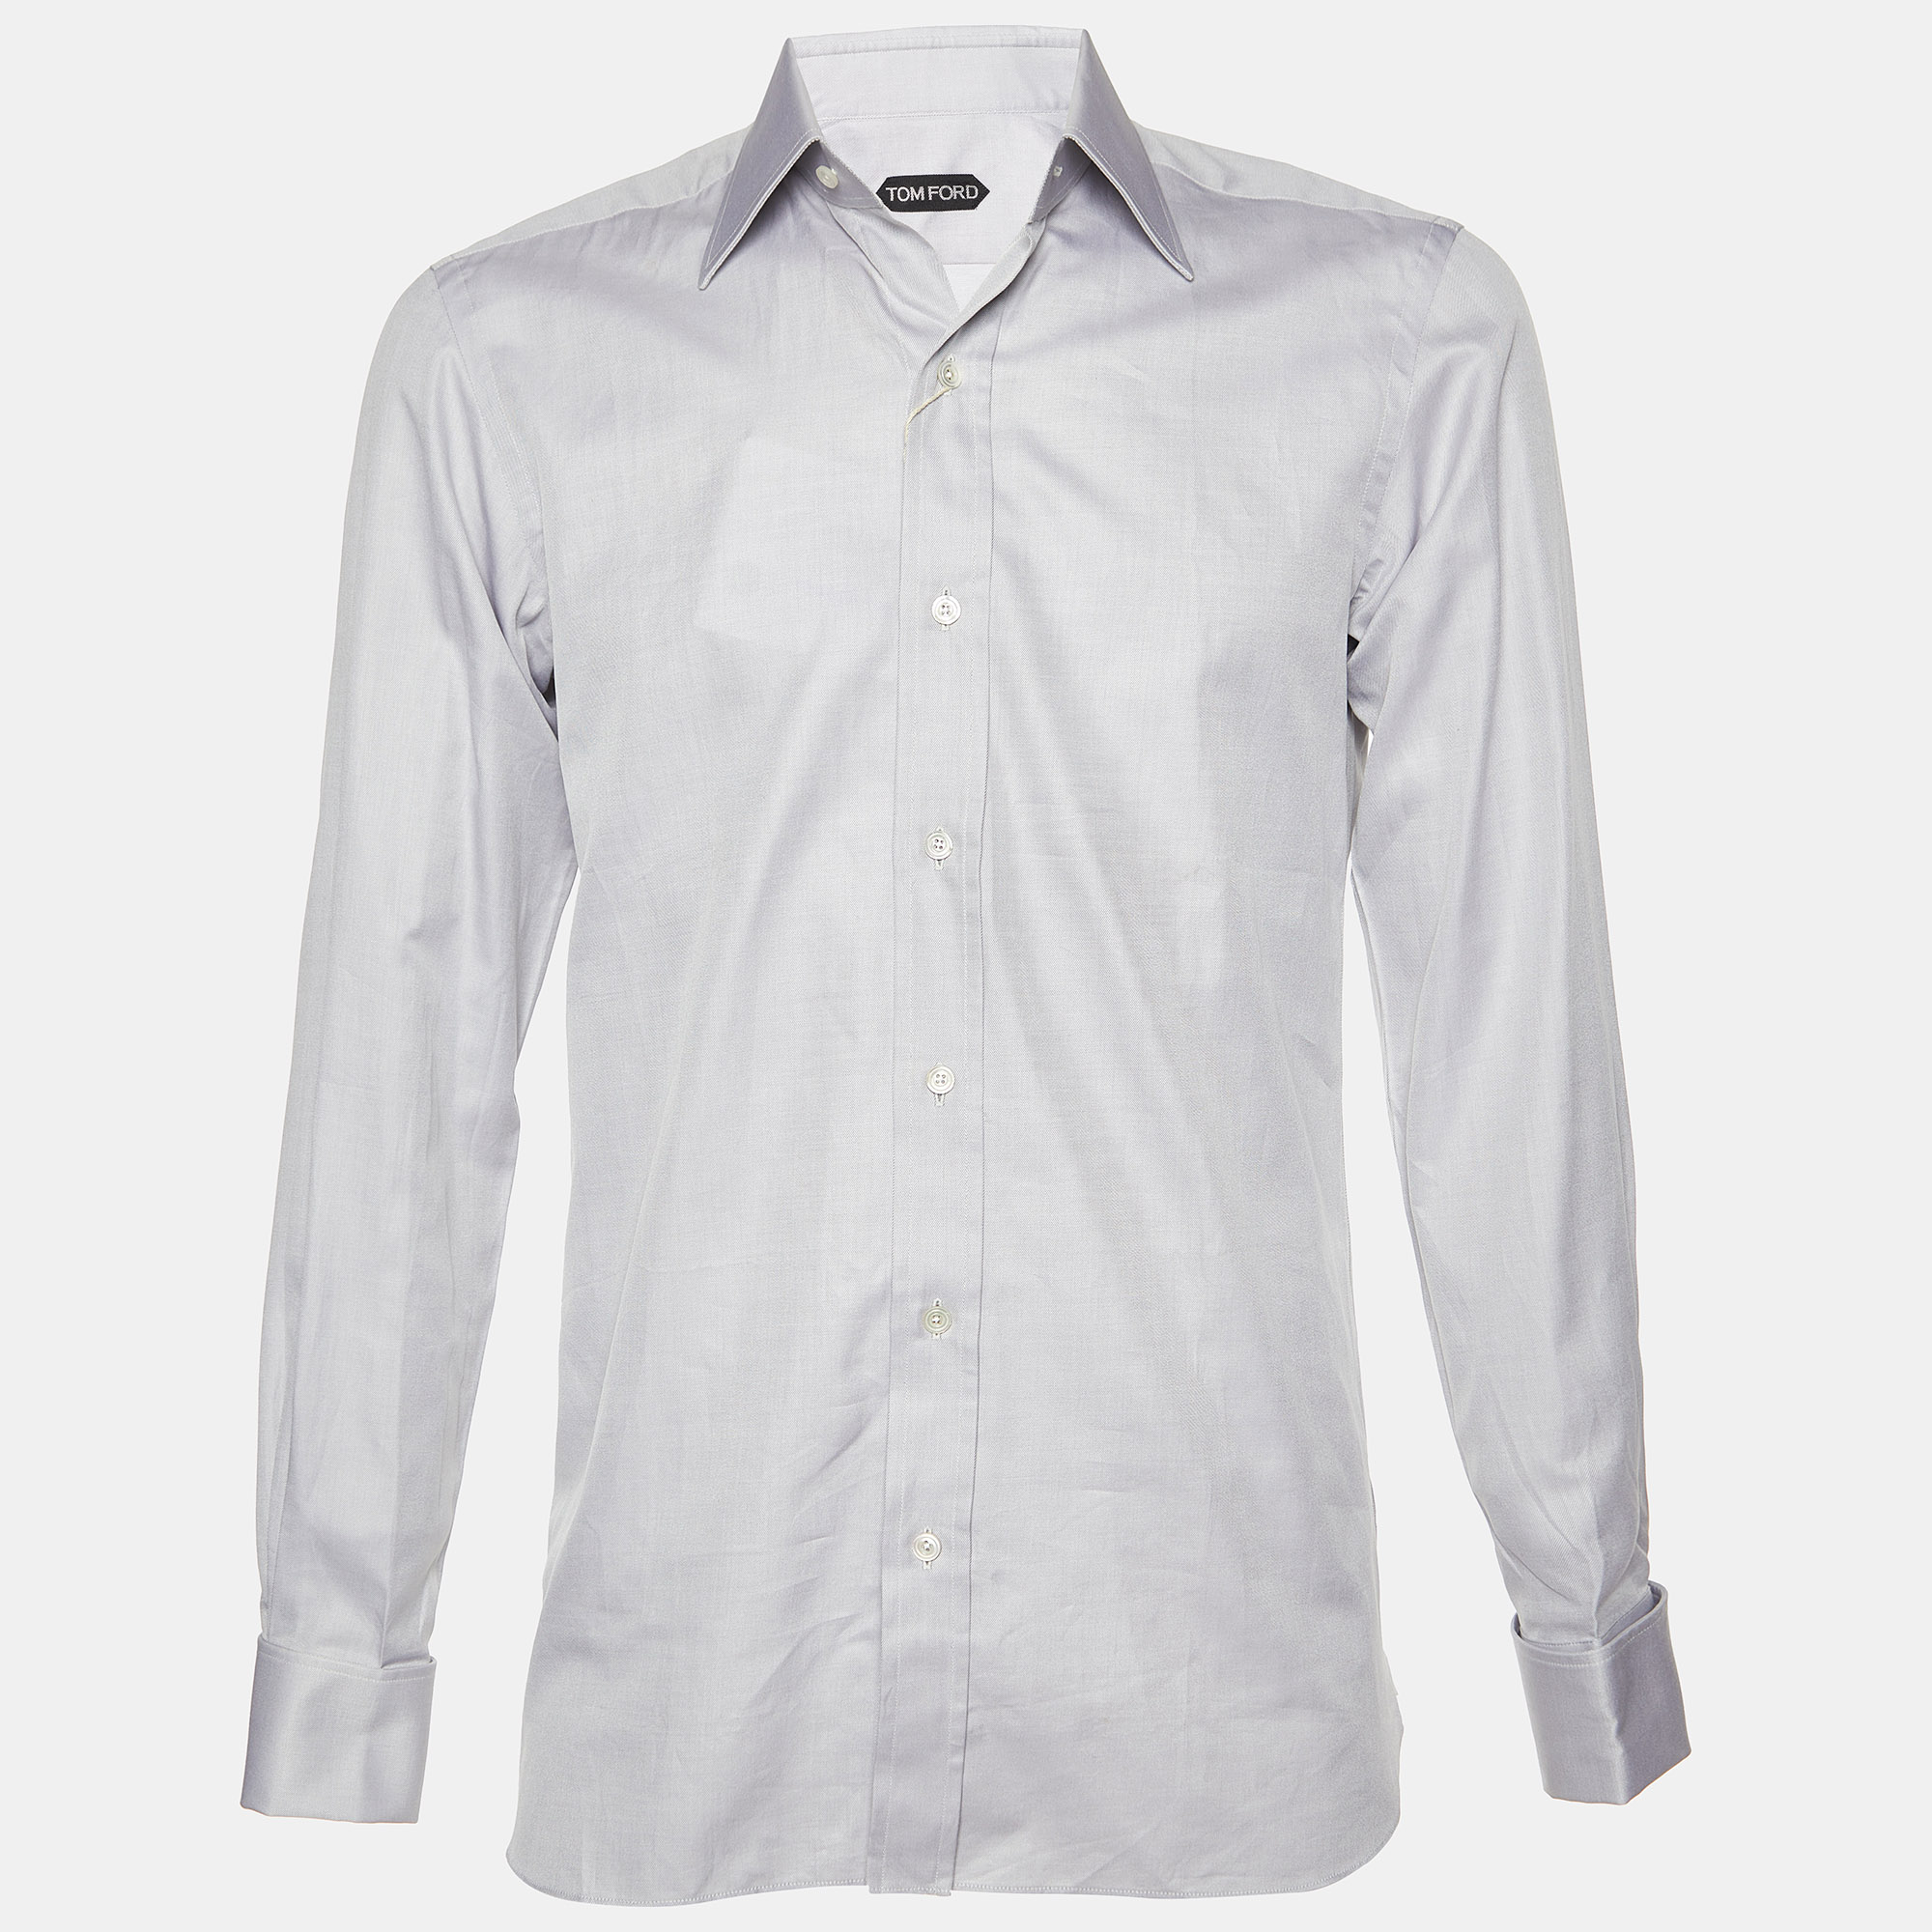 Tom ford grey cotton long sleeve shirt m (eu 39)